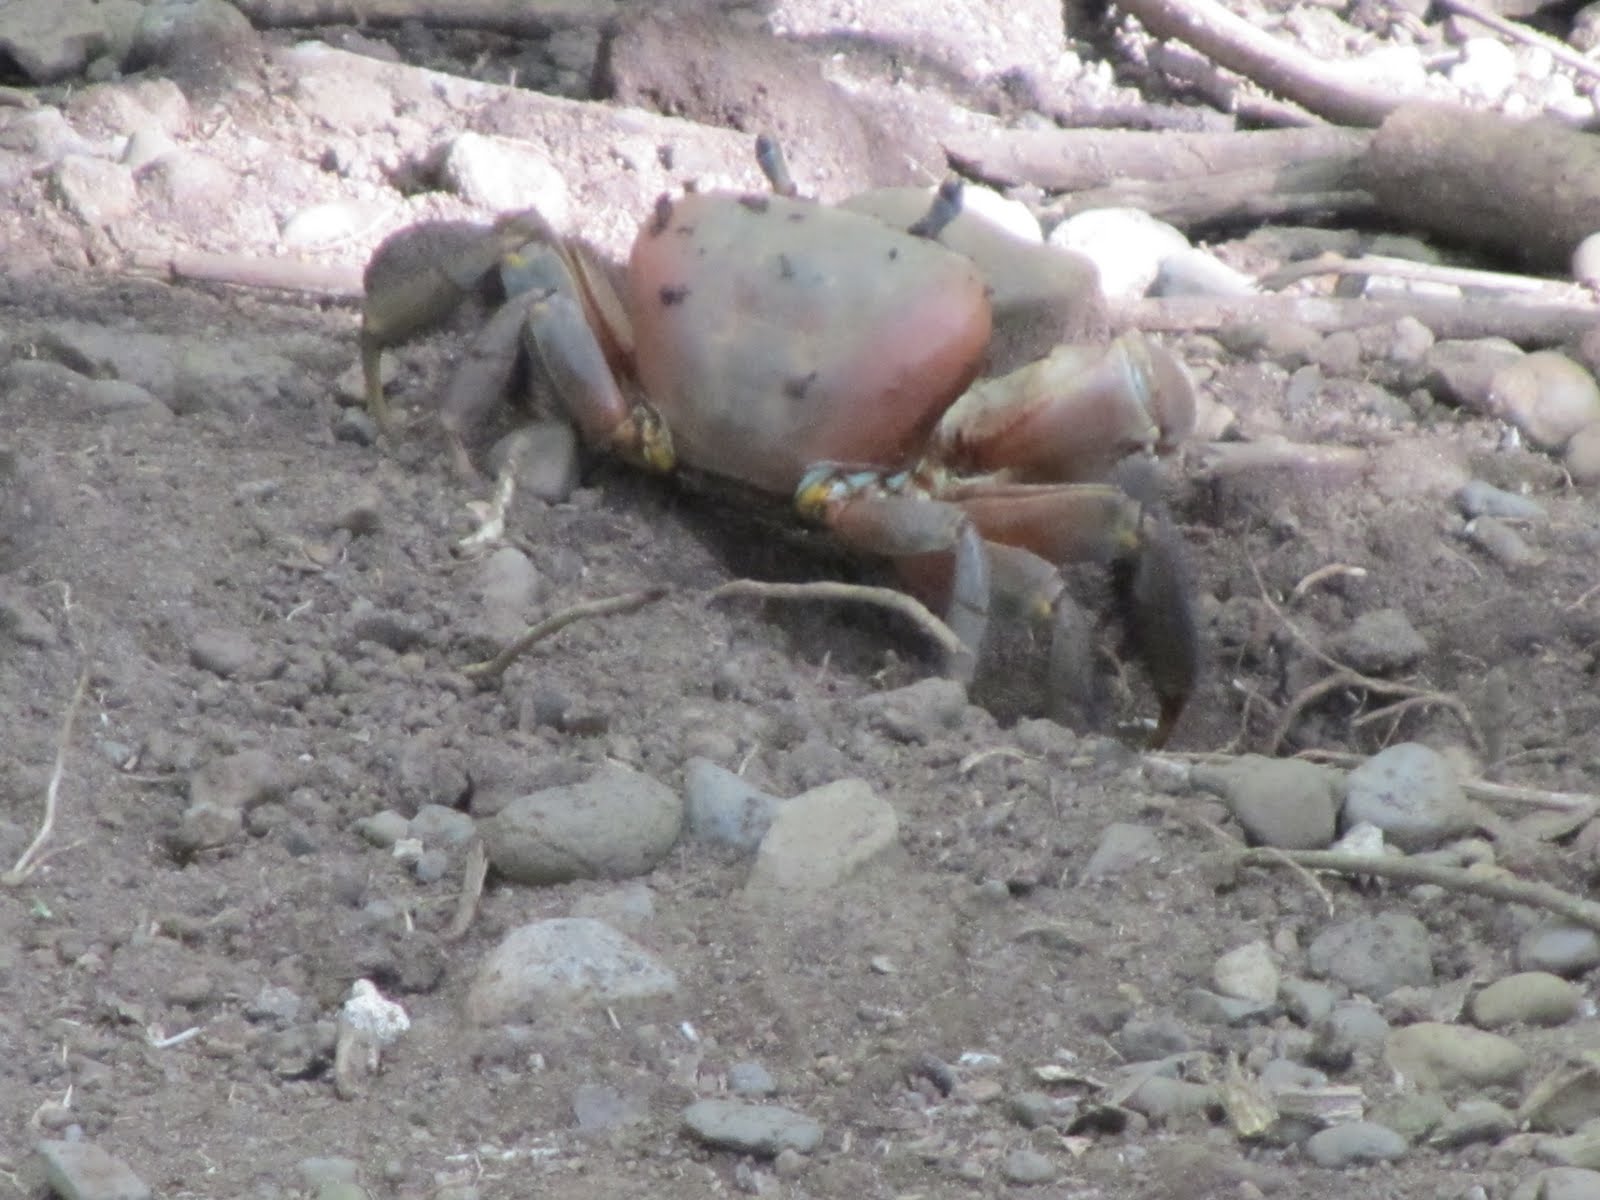 terrestrial crab at edge of burrow